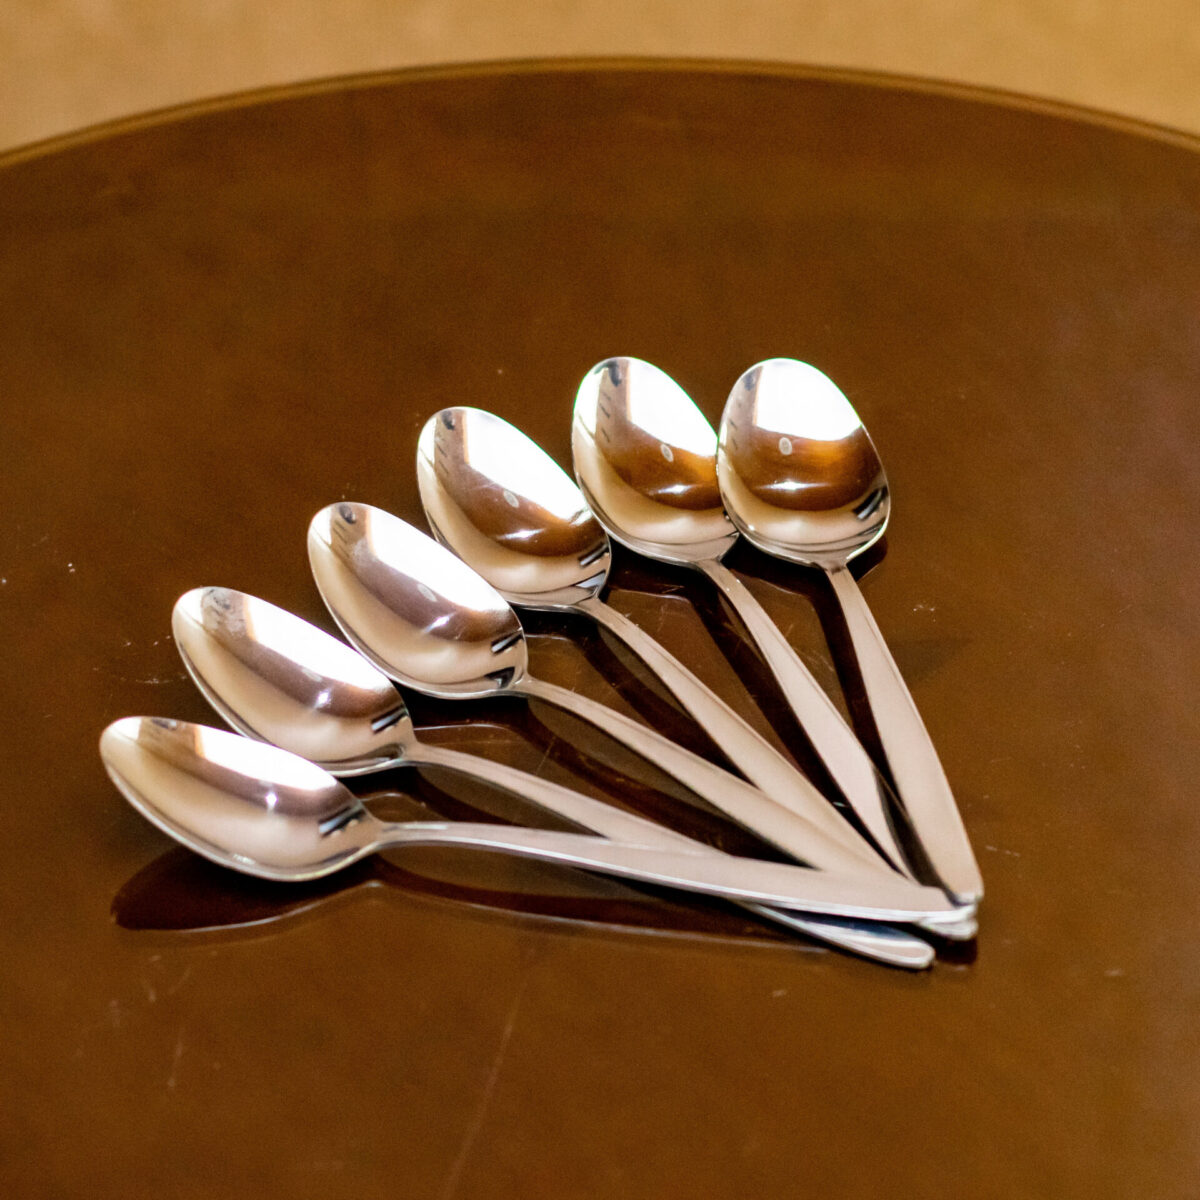 mono-table-spoons-6-pc-set-763093